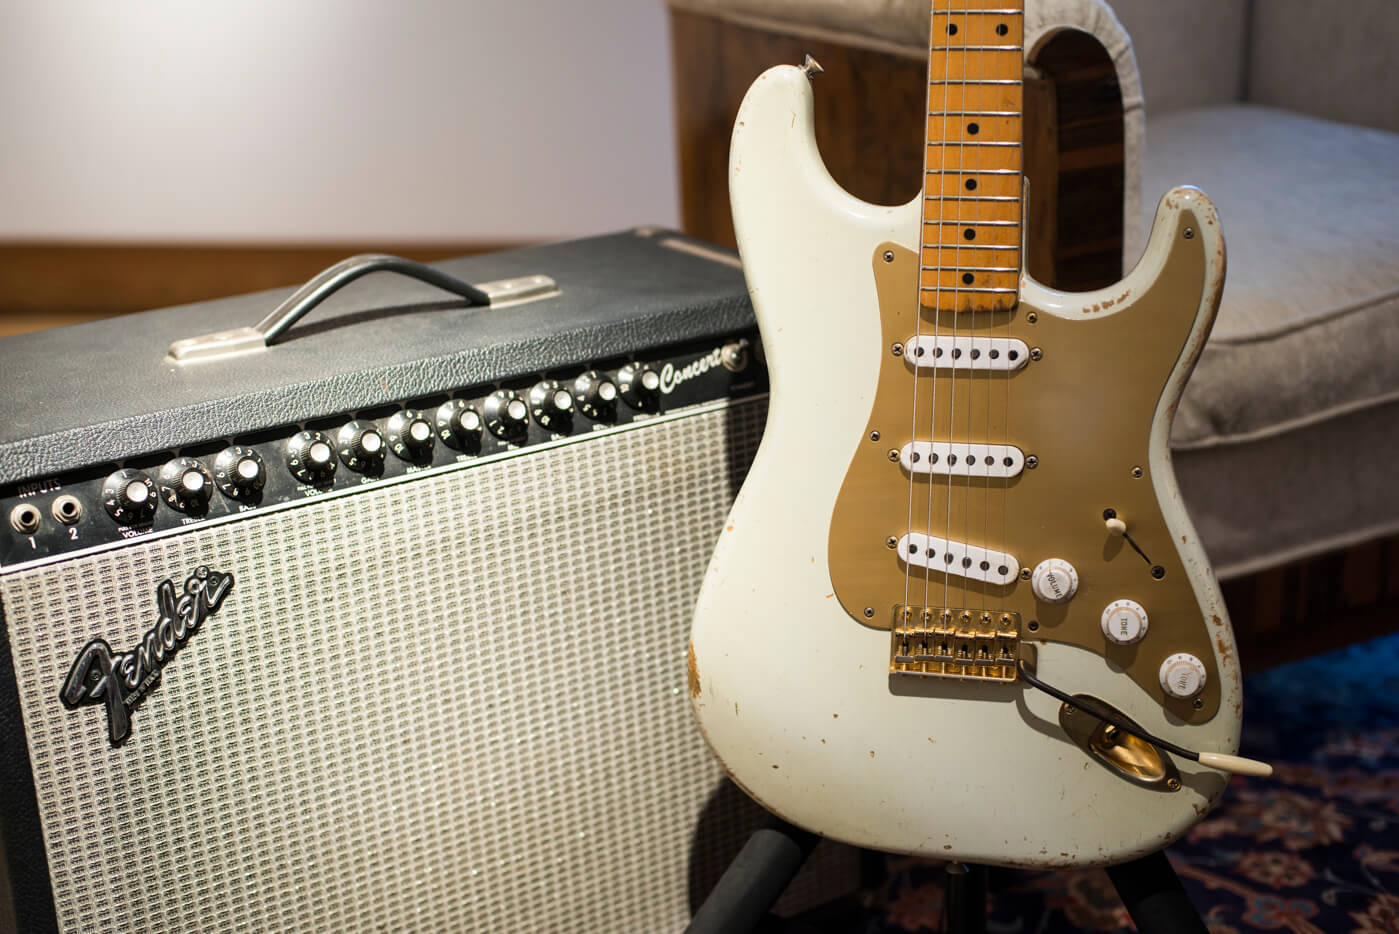 David Gilmour's white Stratocaster